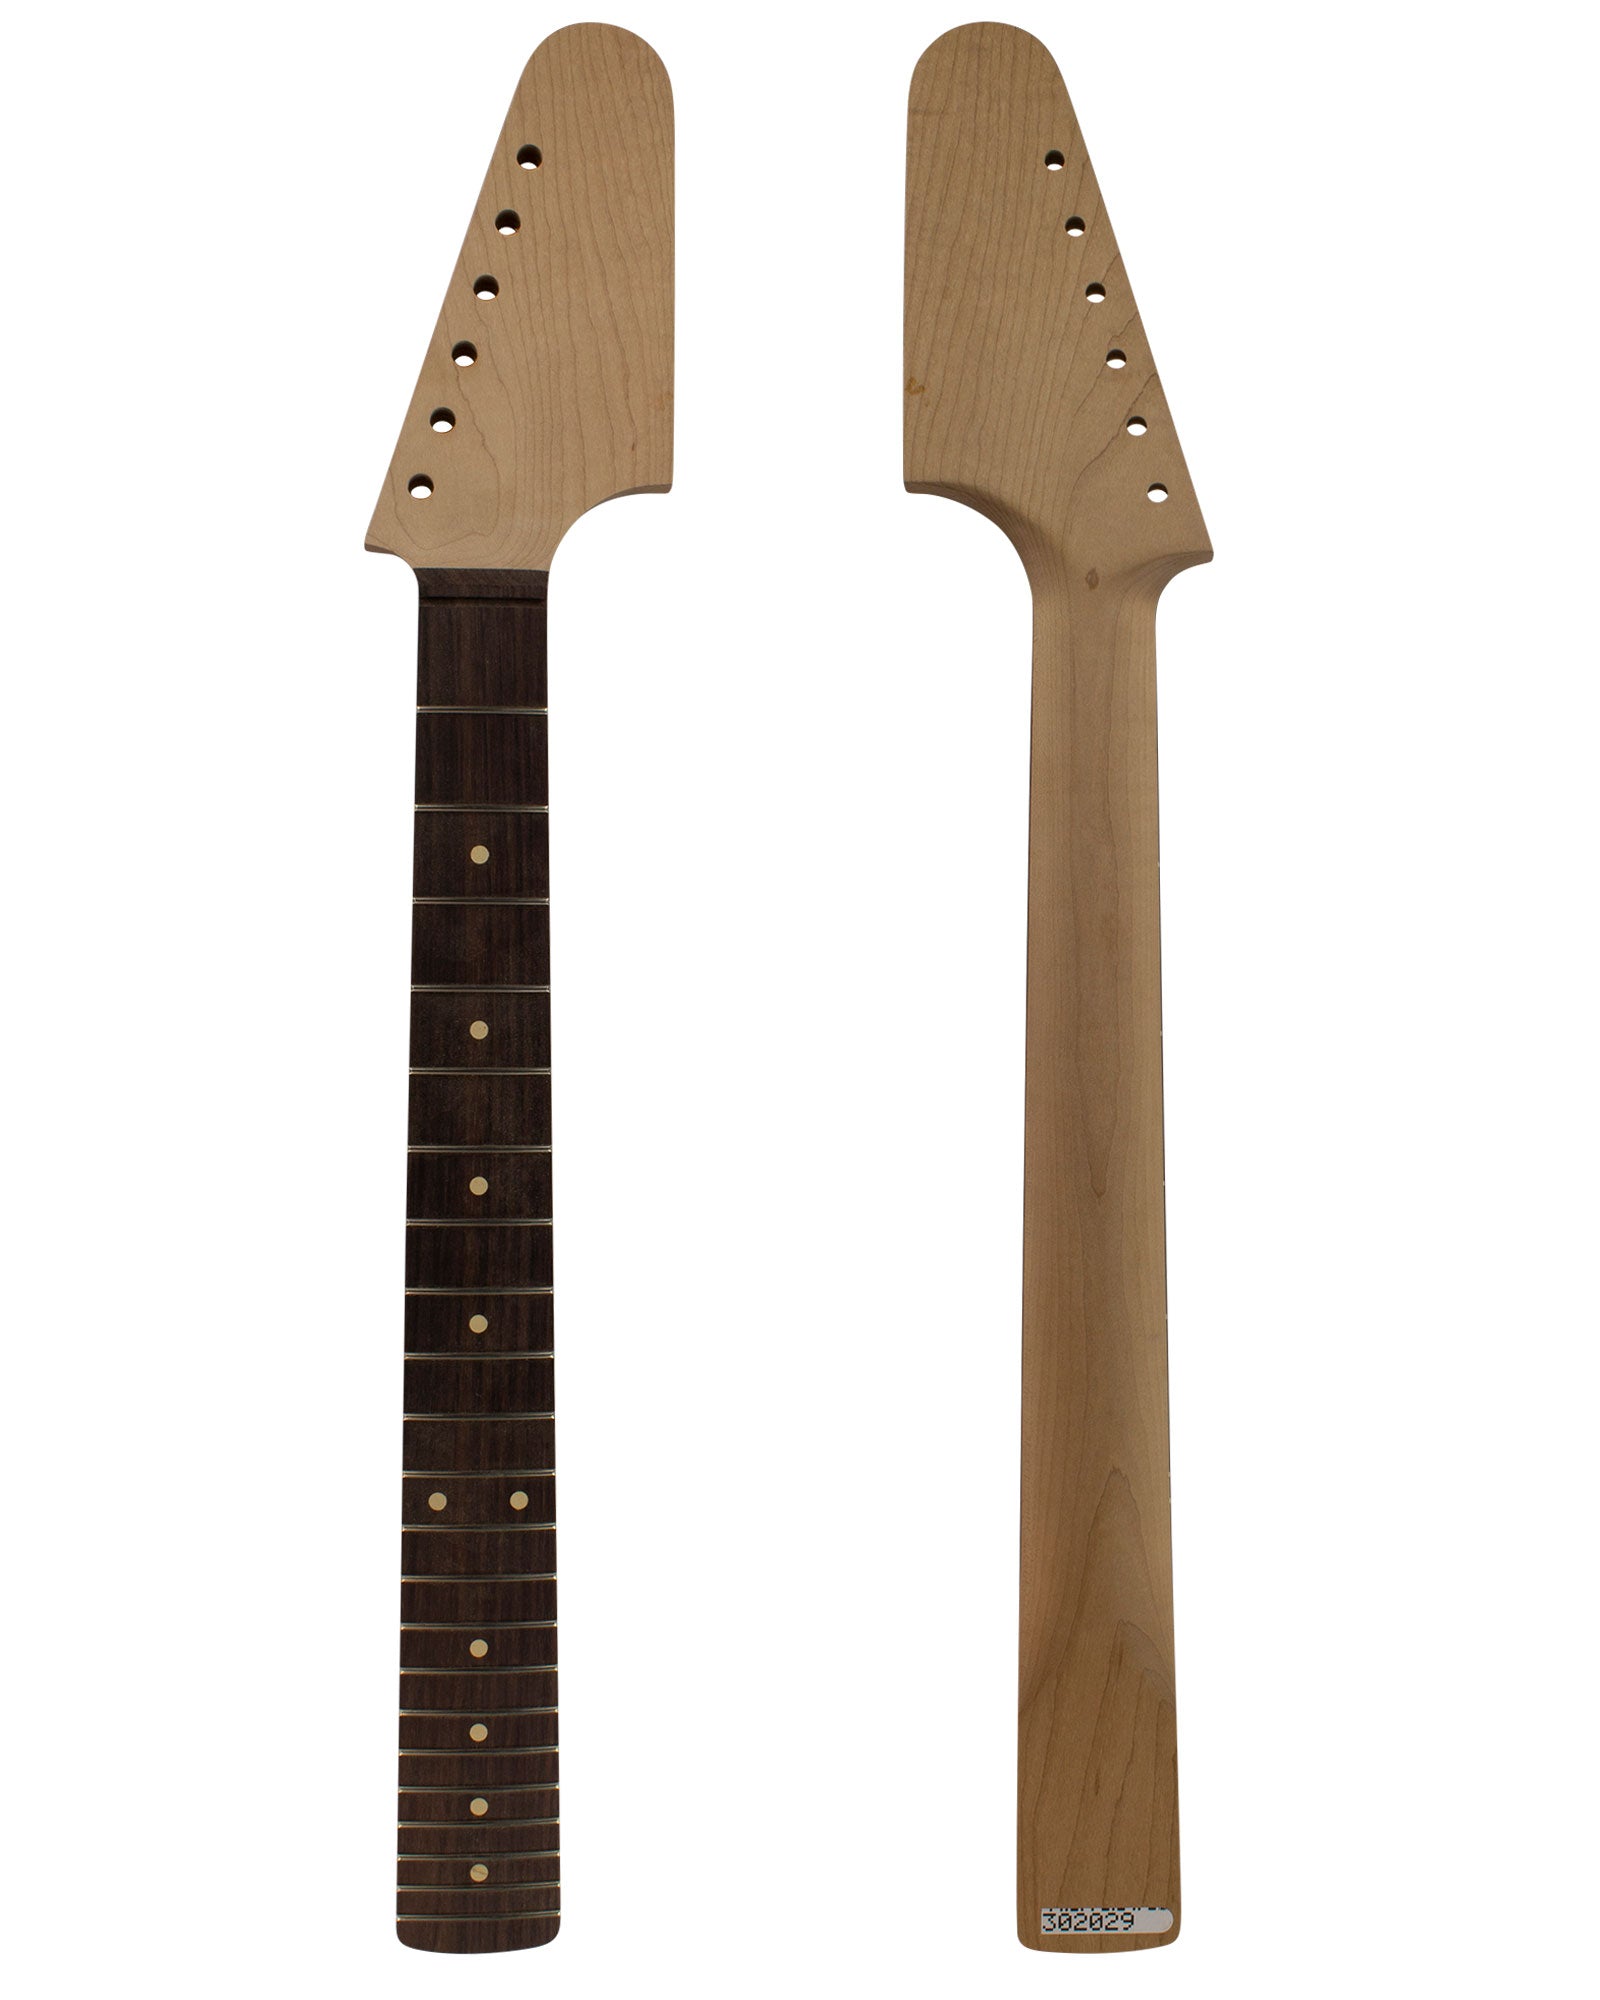 MS/JG Guitar Neck 302029-Guitar Neck - In Stock-Guitarbuild